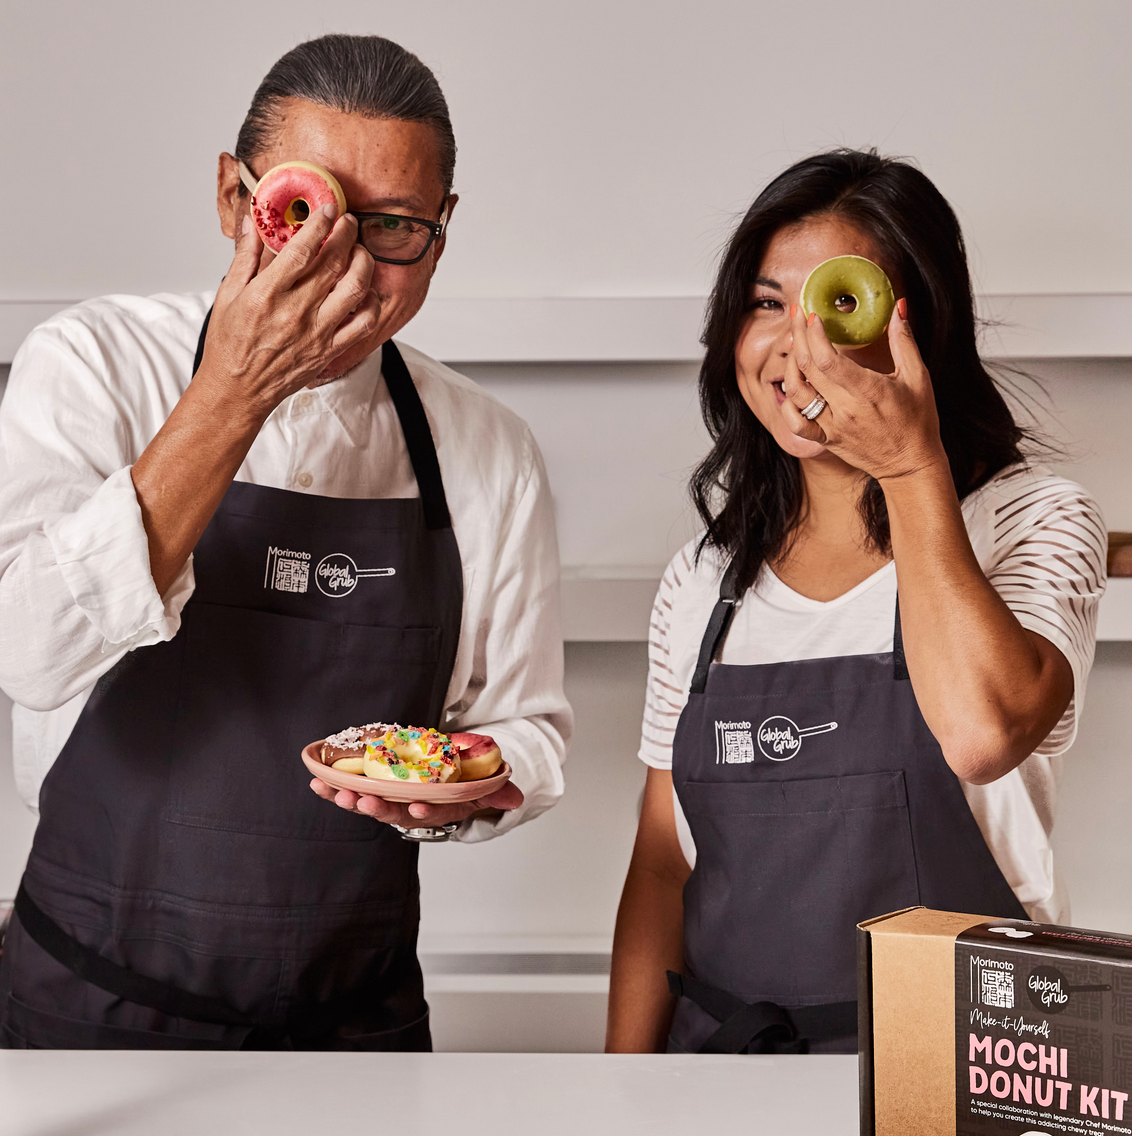 Chef Morimoto and Carley Sheehy, Global Grub founder